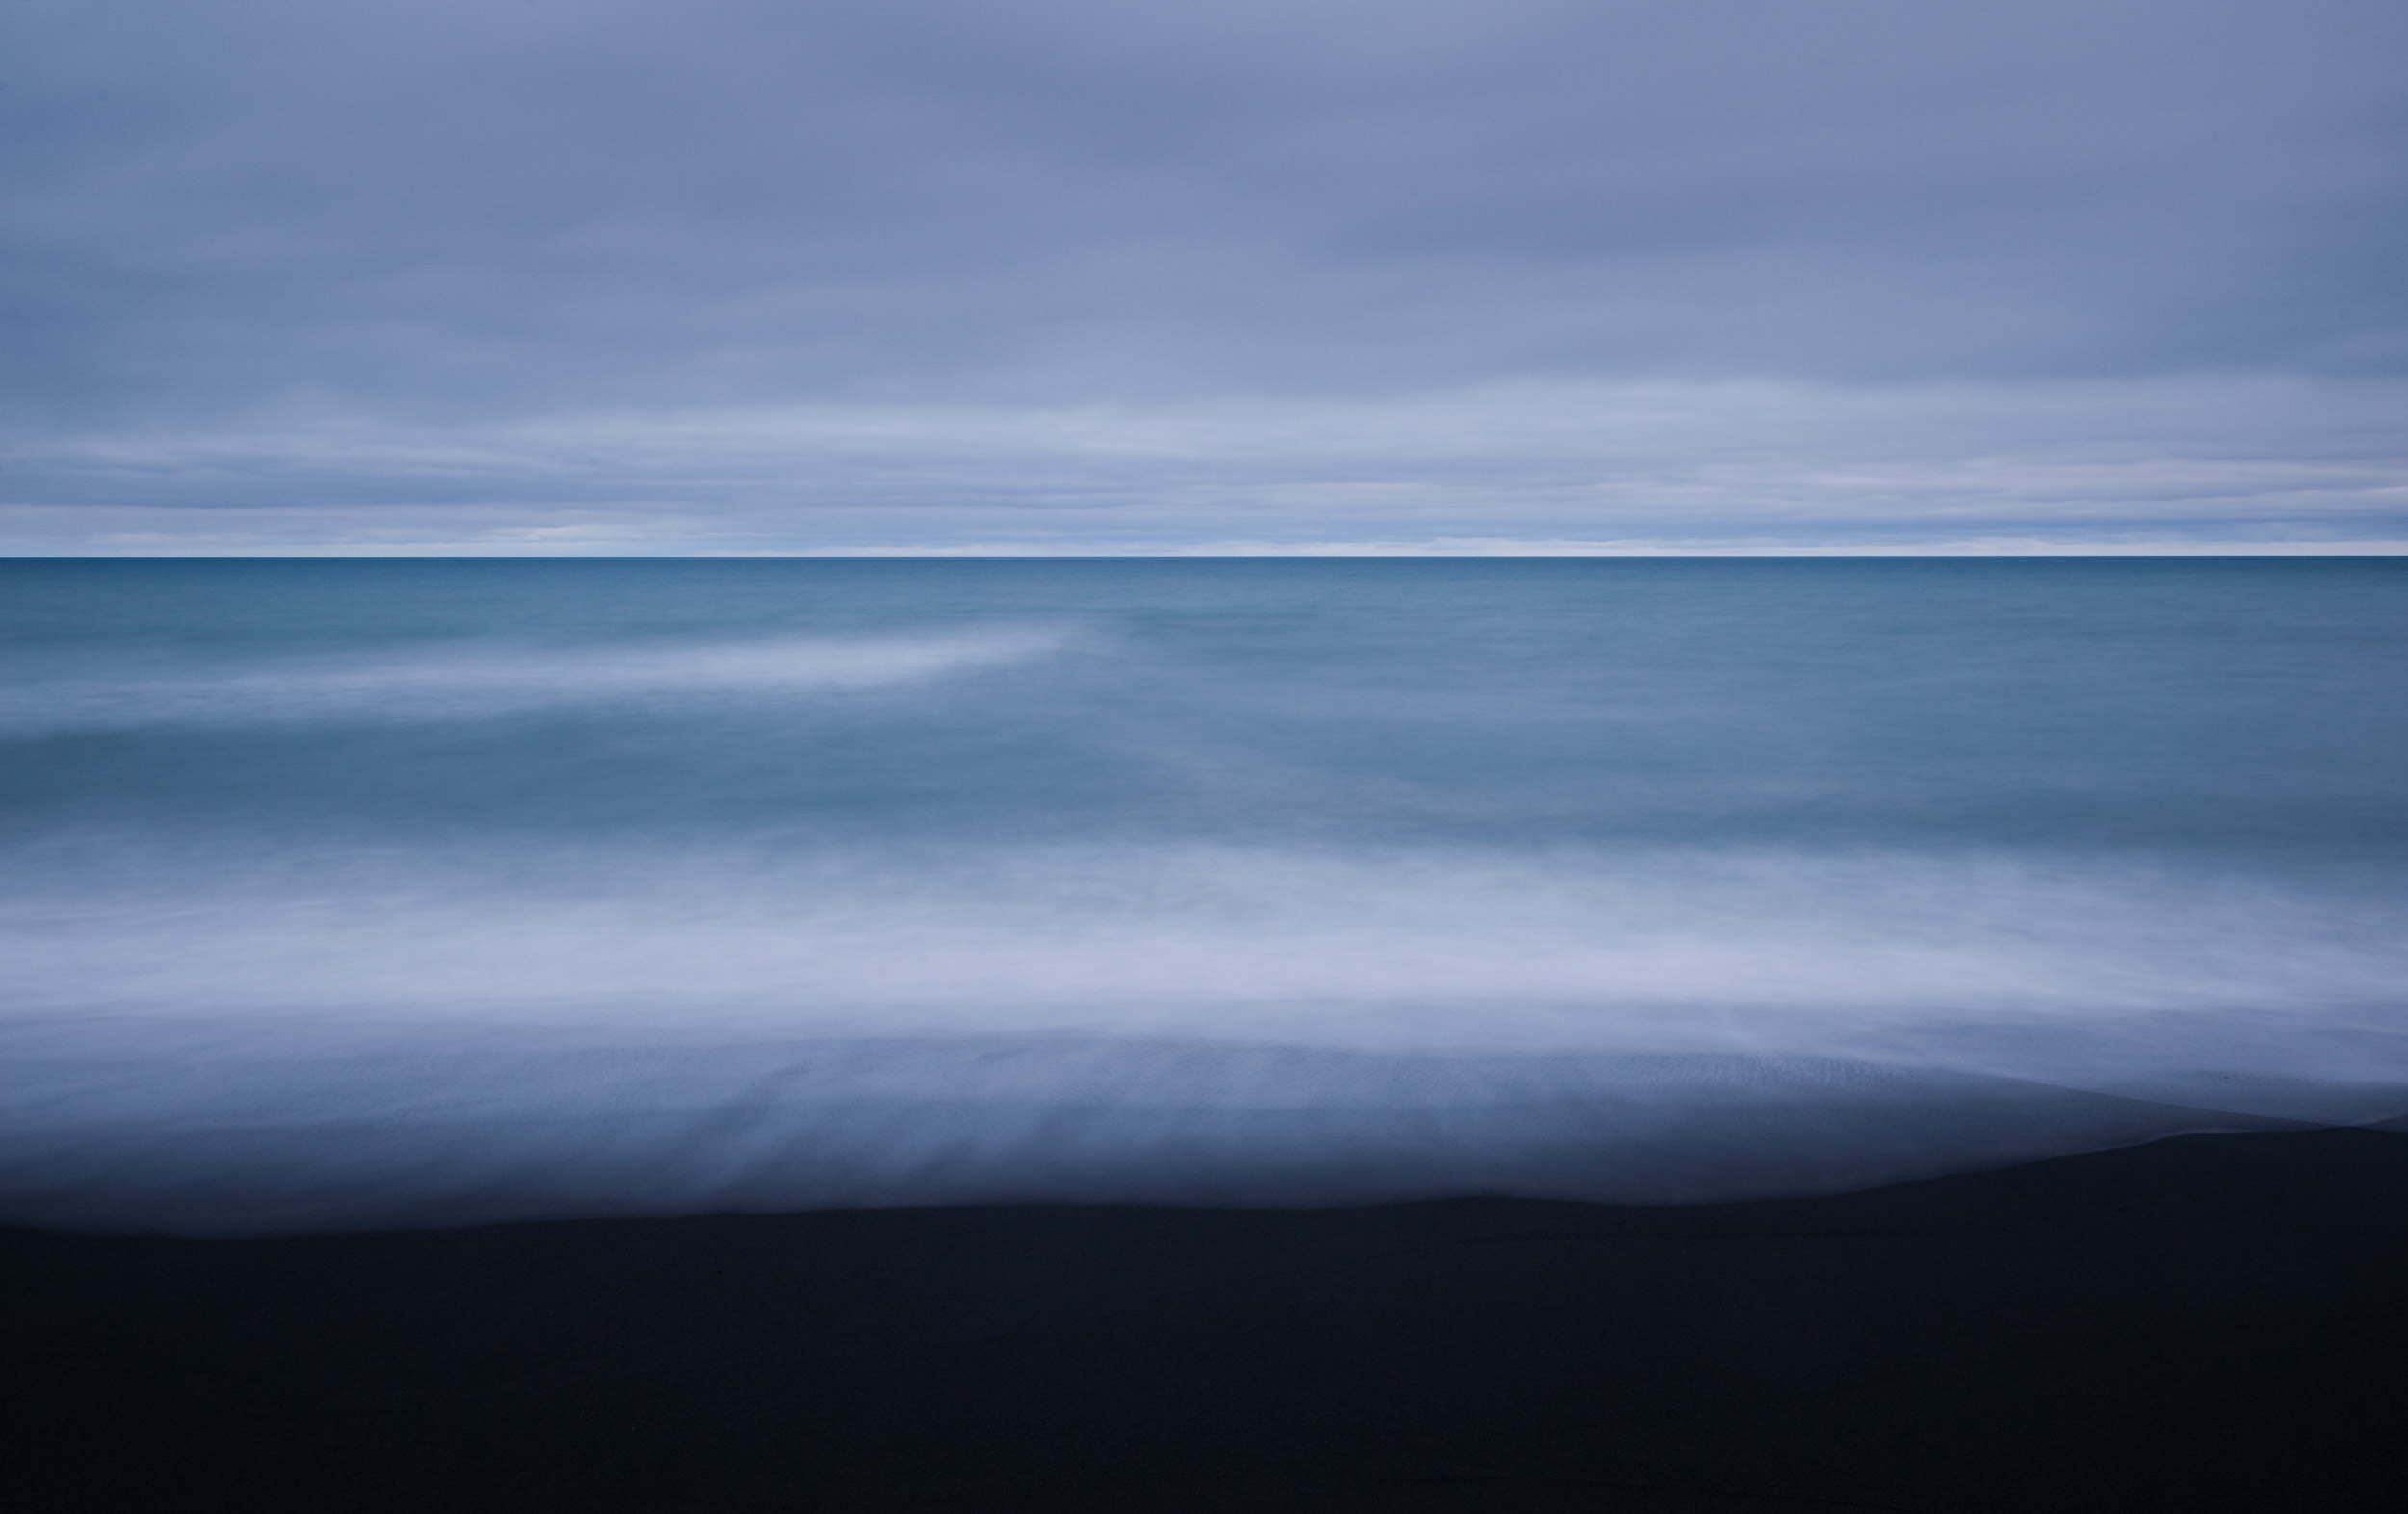 vik-beach-mood-tranquil-overcast-nobody-landscape-sea-iceland